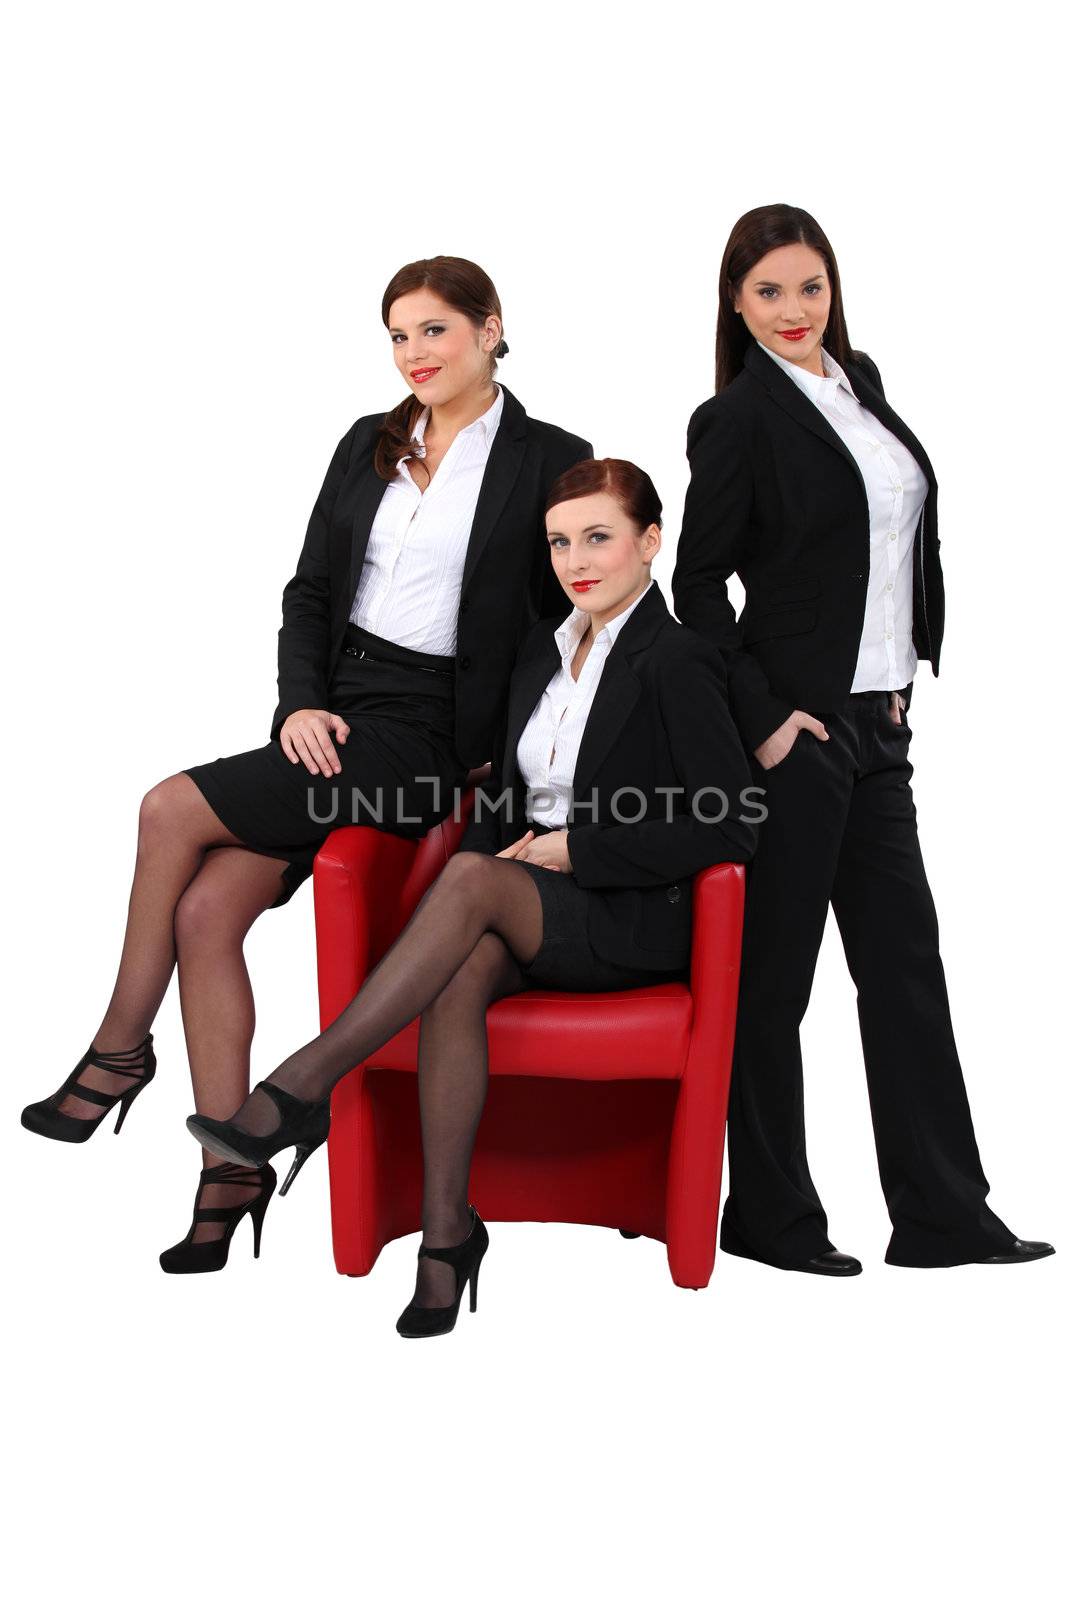 Three elegant women by phovoir